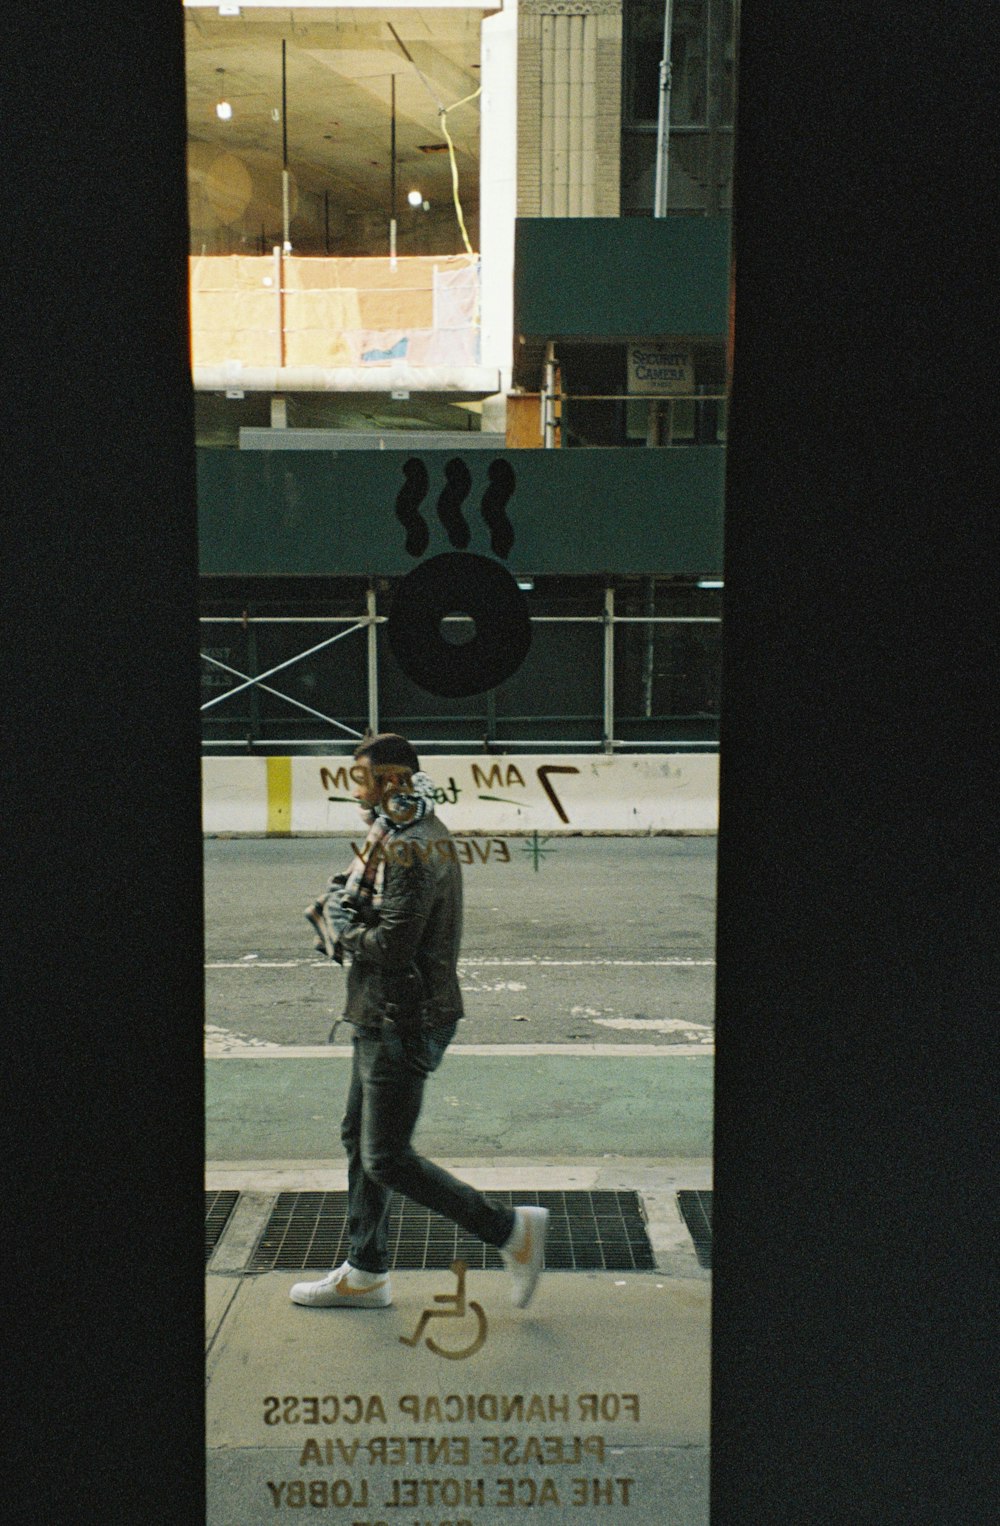 a man walking down a sidewalk next to a tall building